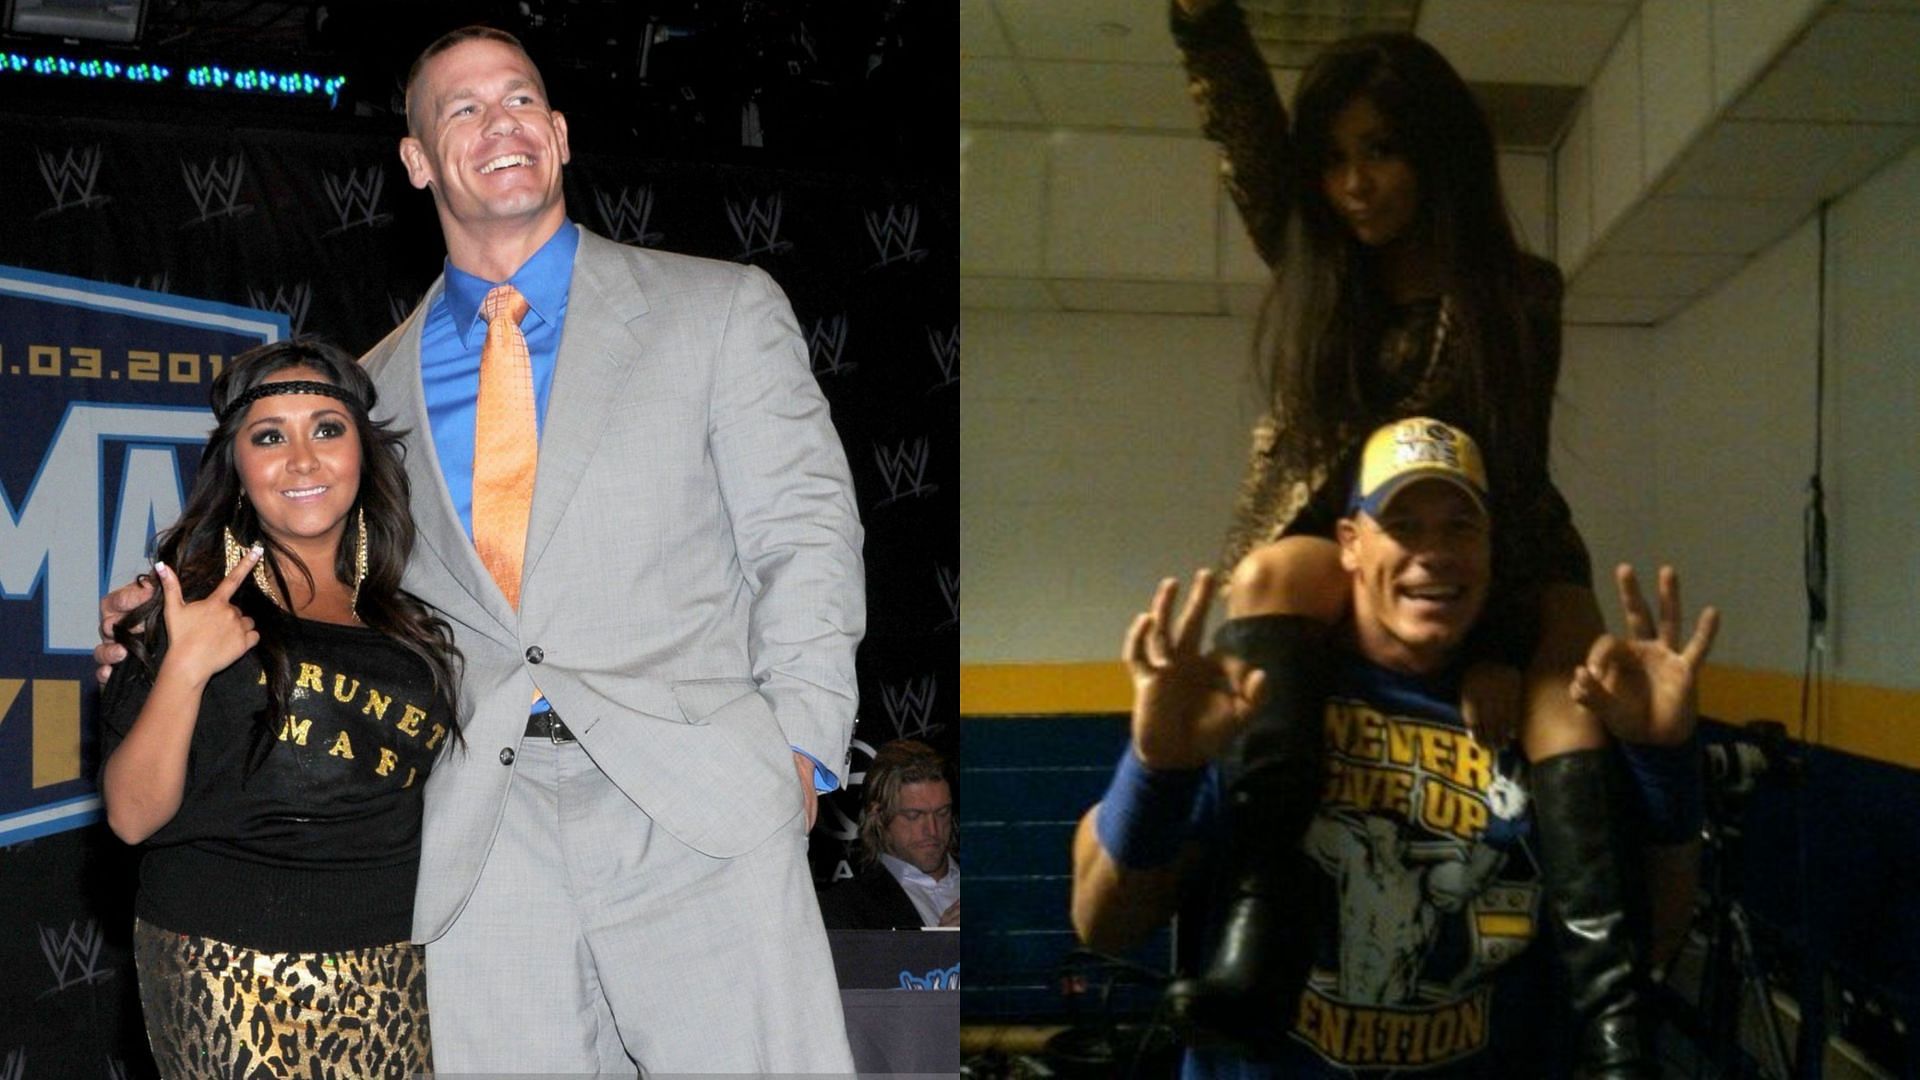 Snooki has met John Cena several times